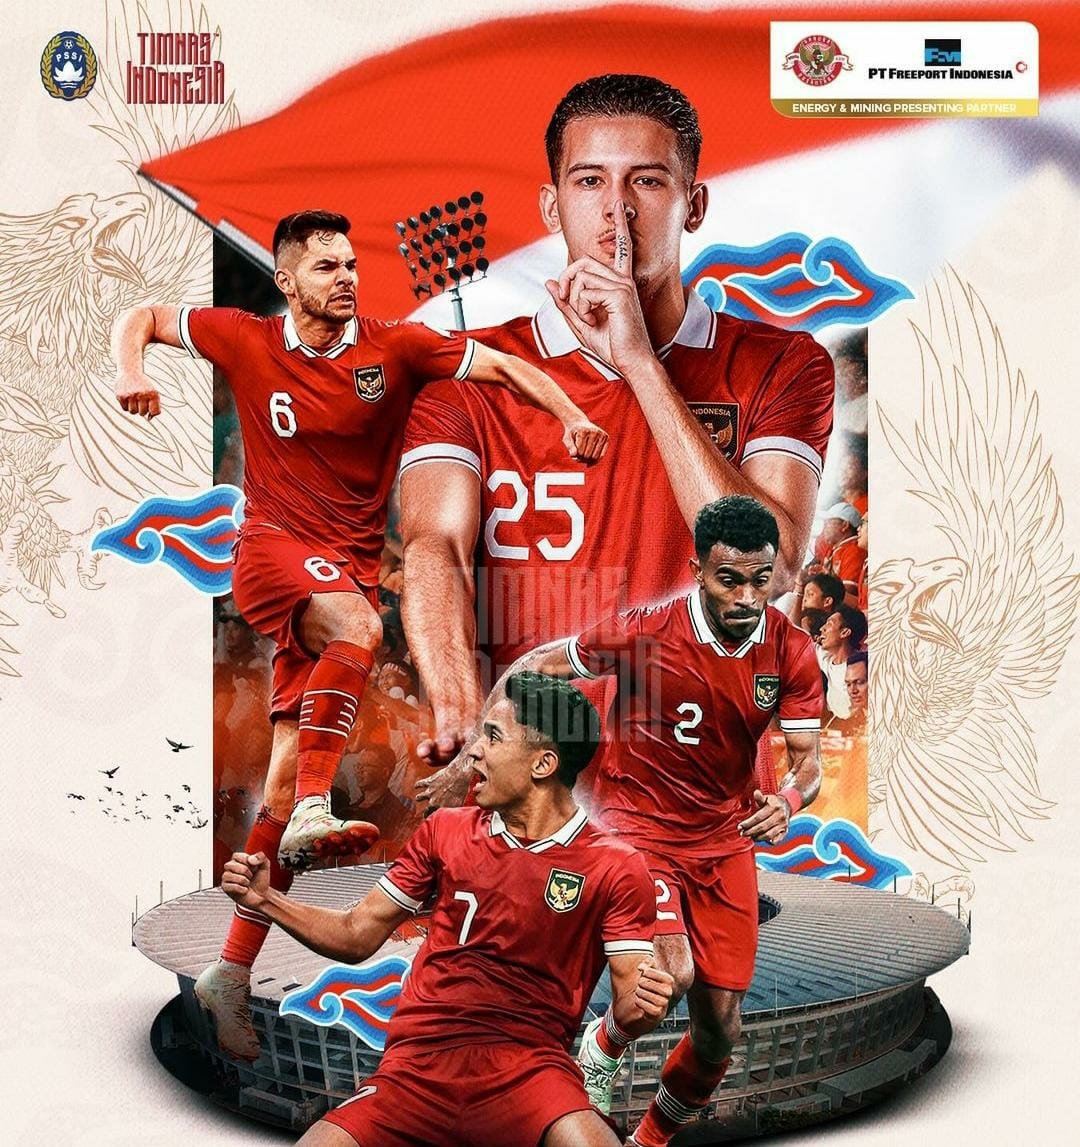 Hari ini Timnas Indoensia Bertolak ke Hanoi Vietnam untuk menjalani laga lanjutan Piala Dunia 2026